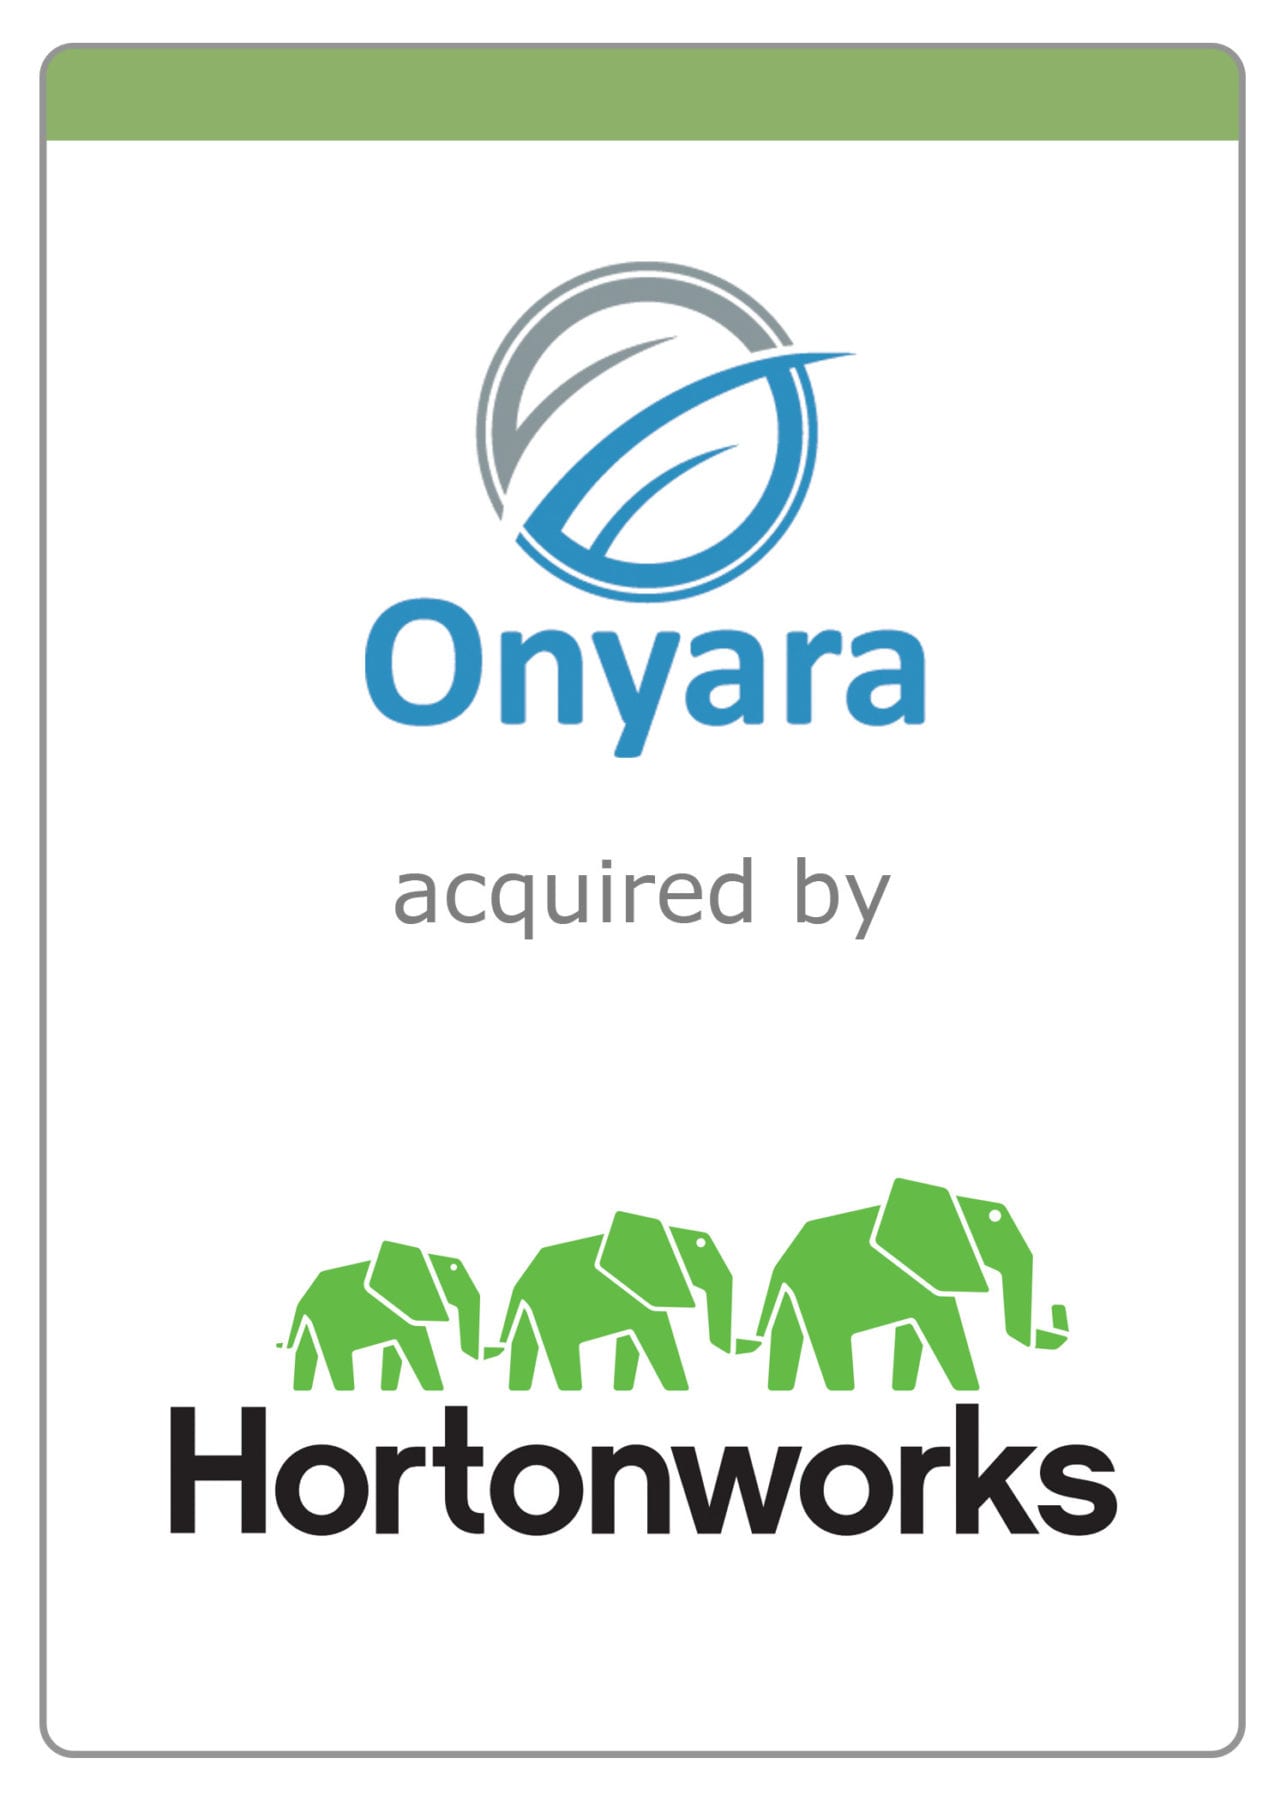 Onyara acquired by Hortonworks - The McLean Group